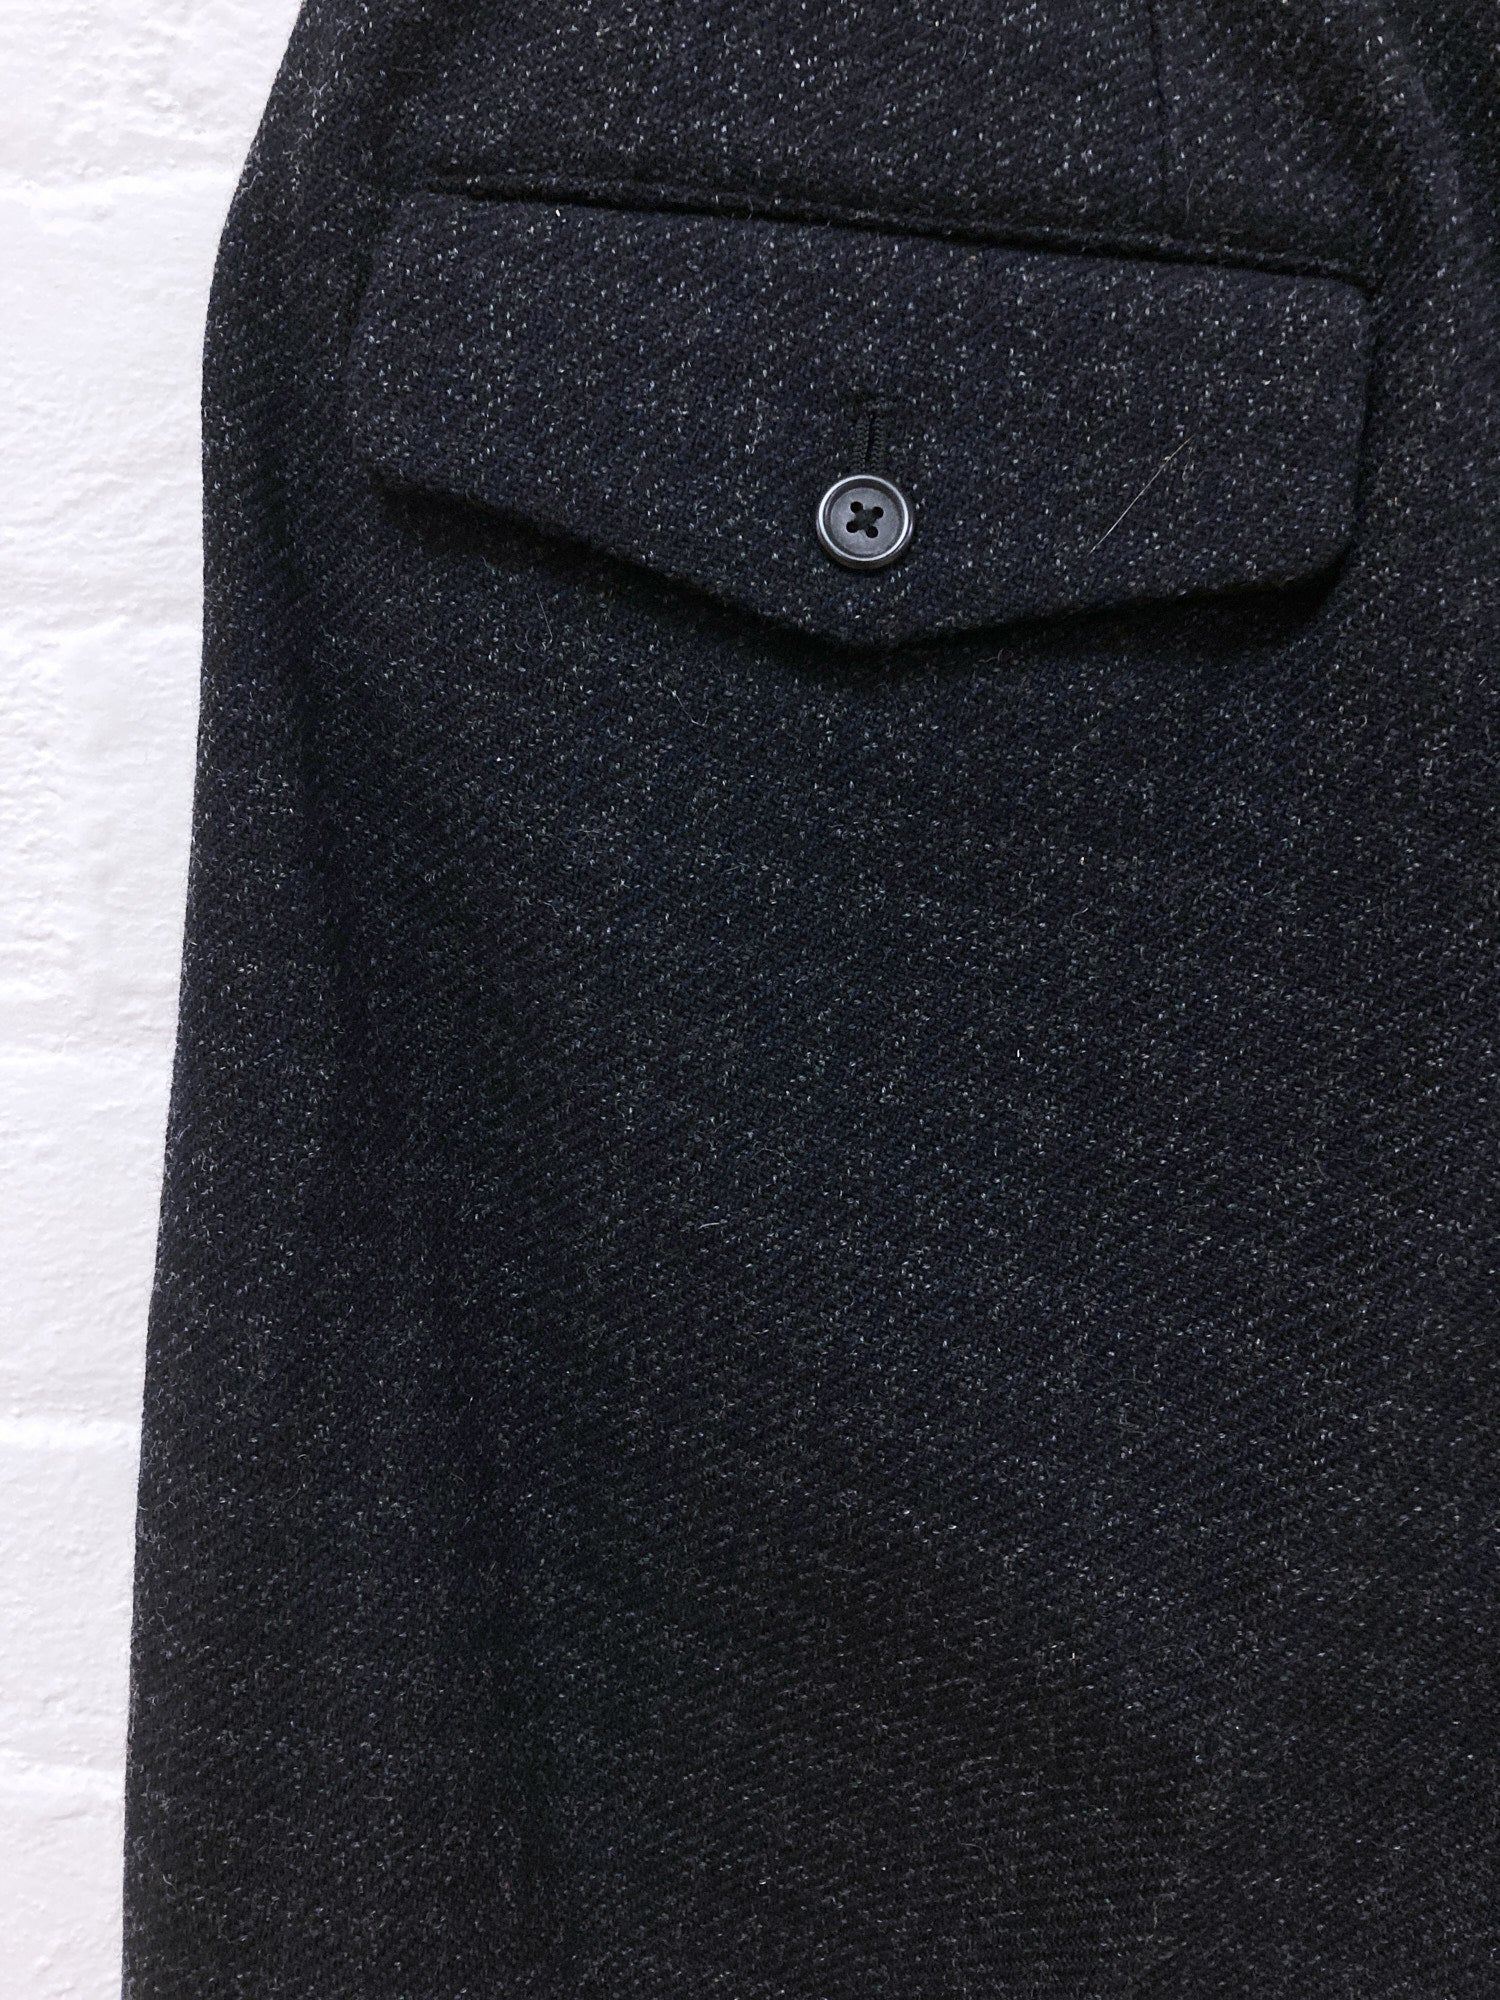 Y's for Men Yohji Yamamoto dark navy wool check coat and trouser suit - S M